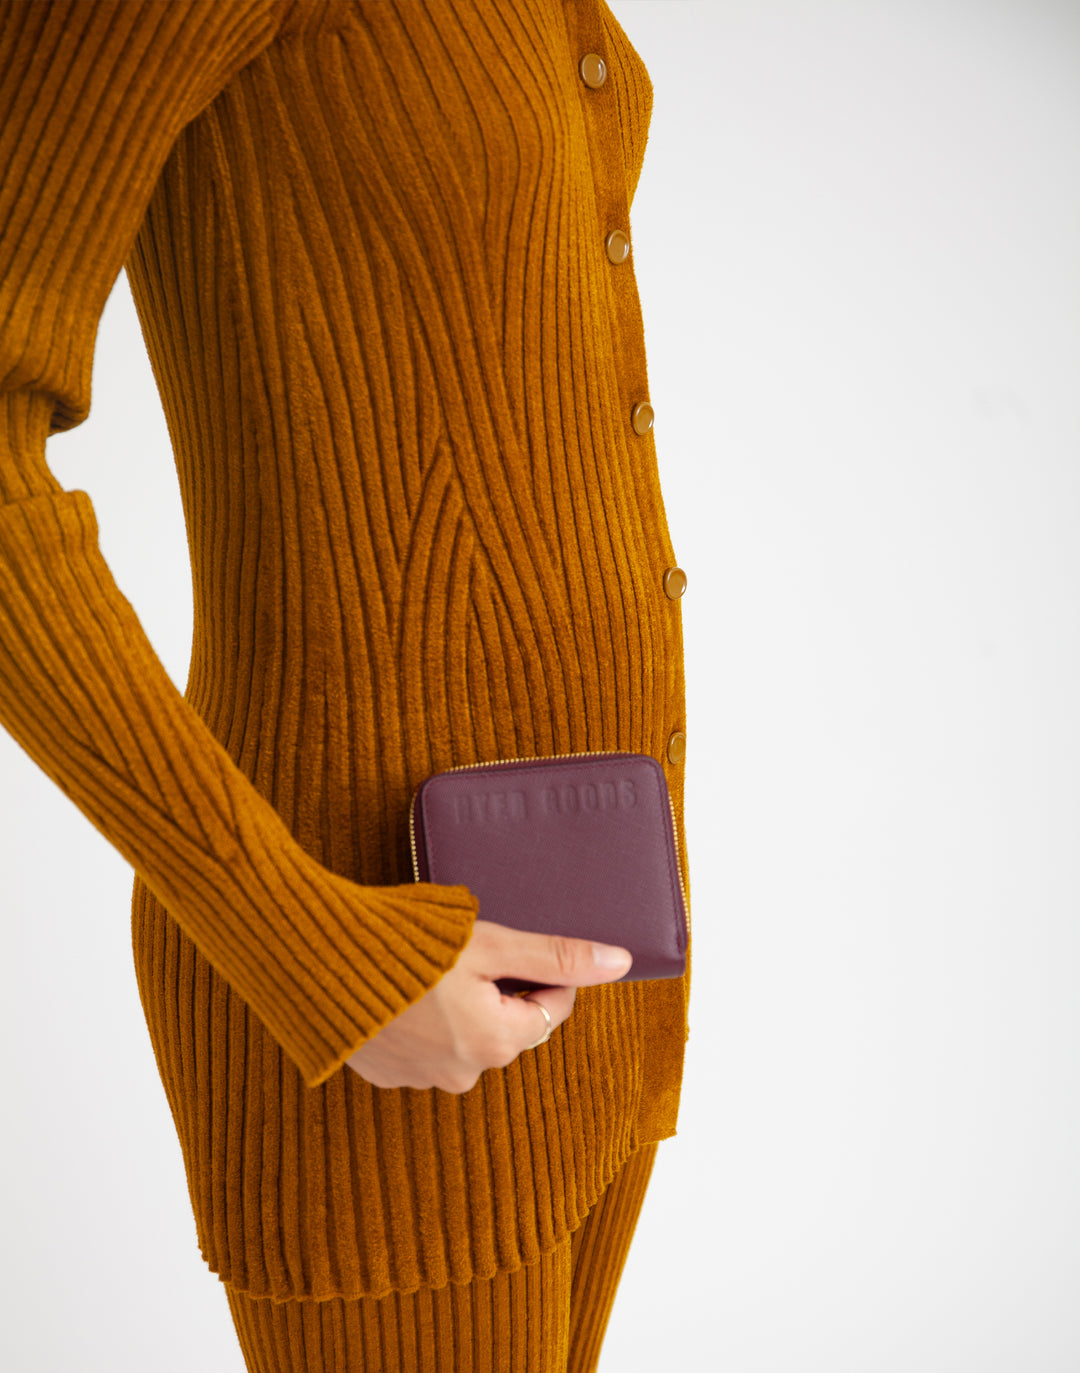 hyer goods recycled leather zip around wallet dark purple wine#color_wine-saffiano